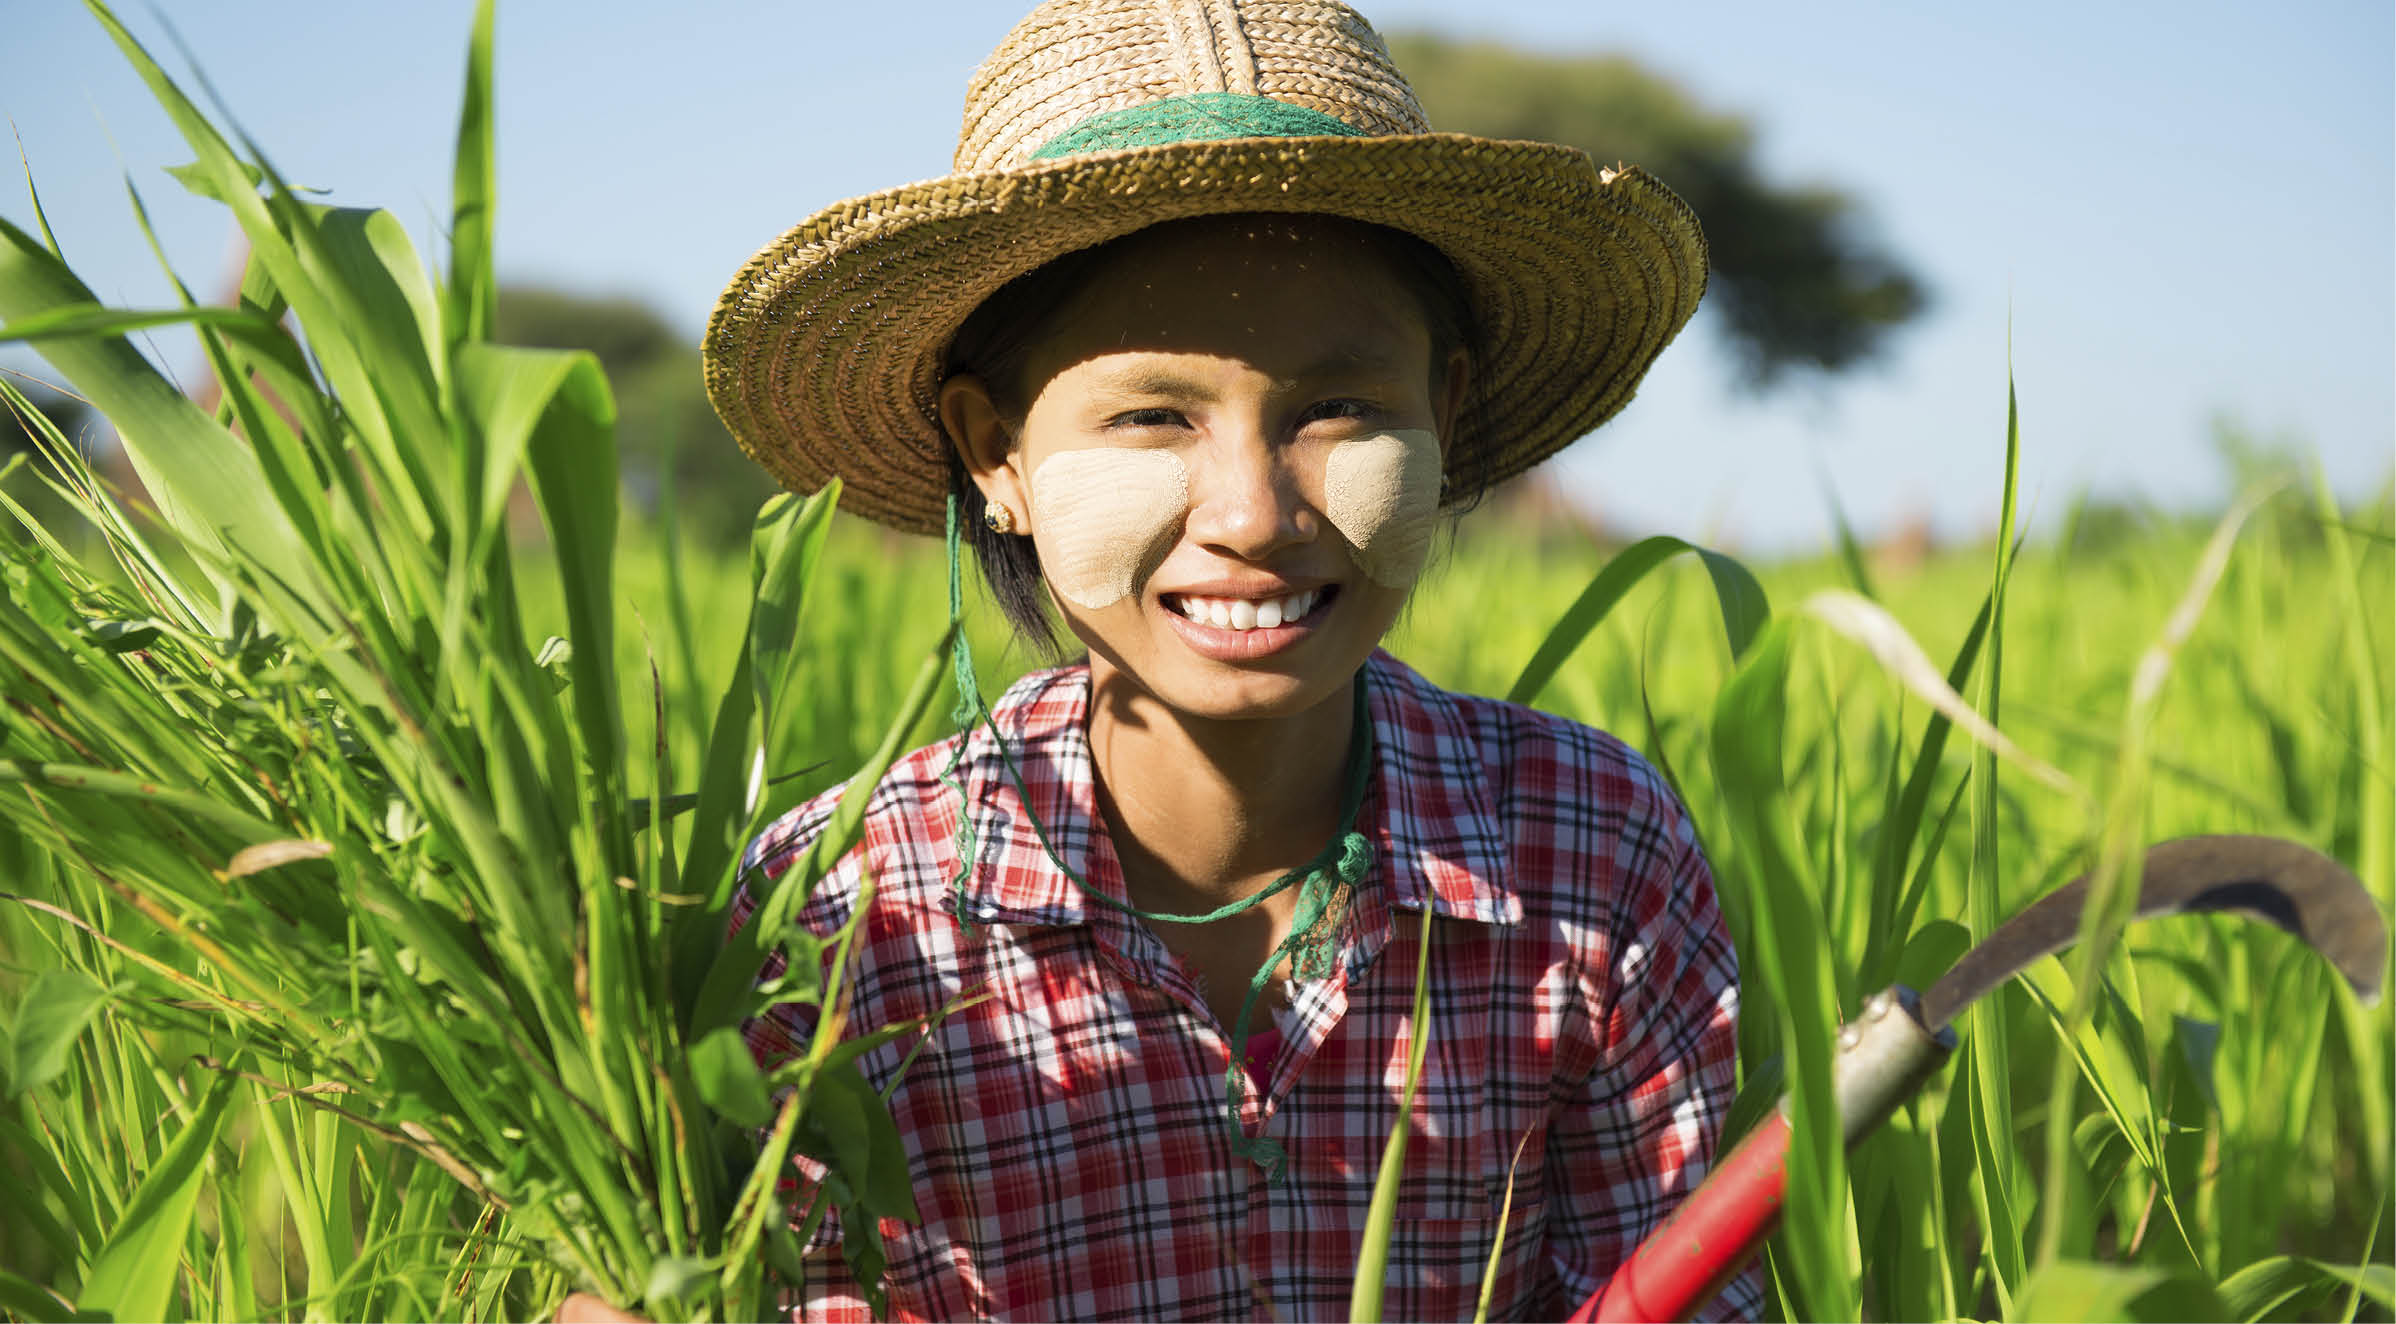 Southeast Asia Myanmar Asian traditional farmer planting or working in corn field, harvesting in field